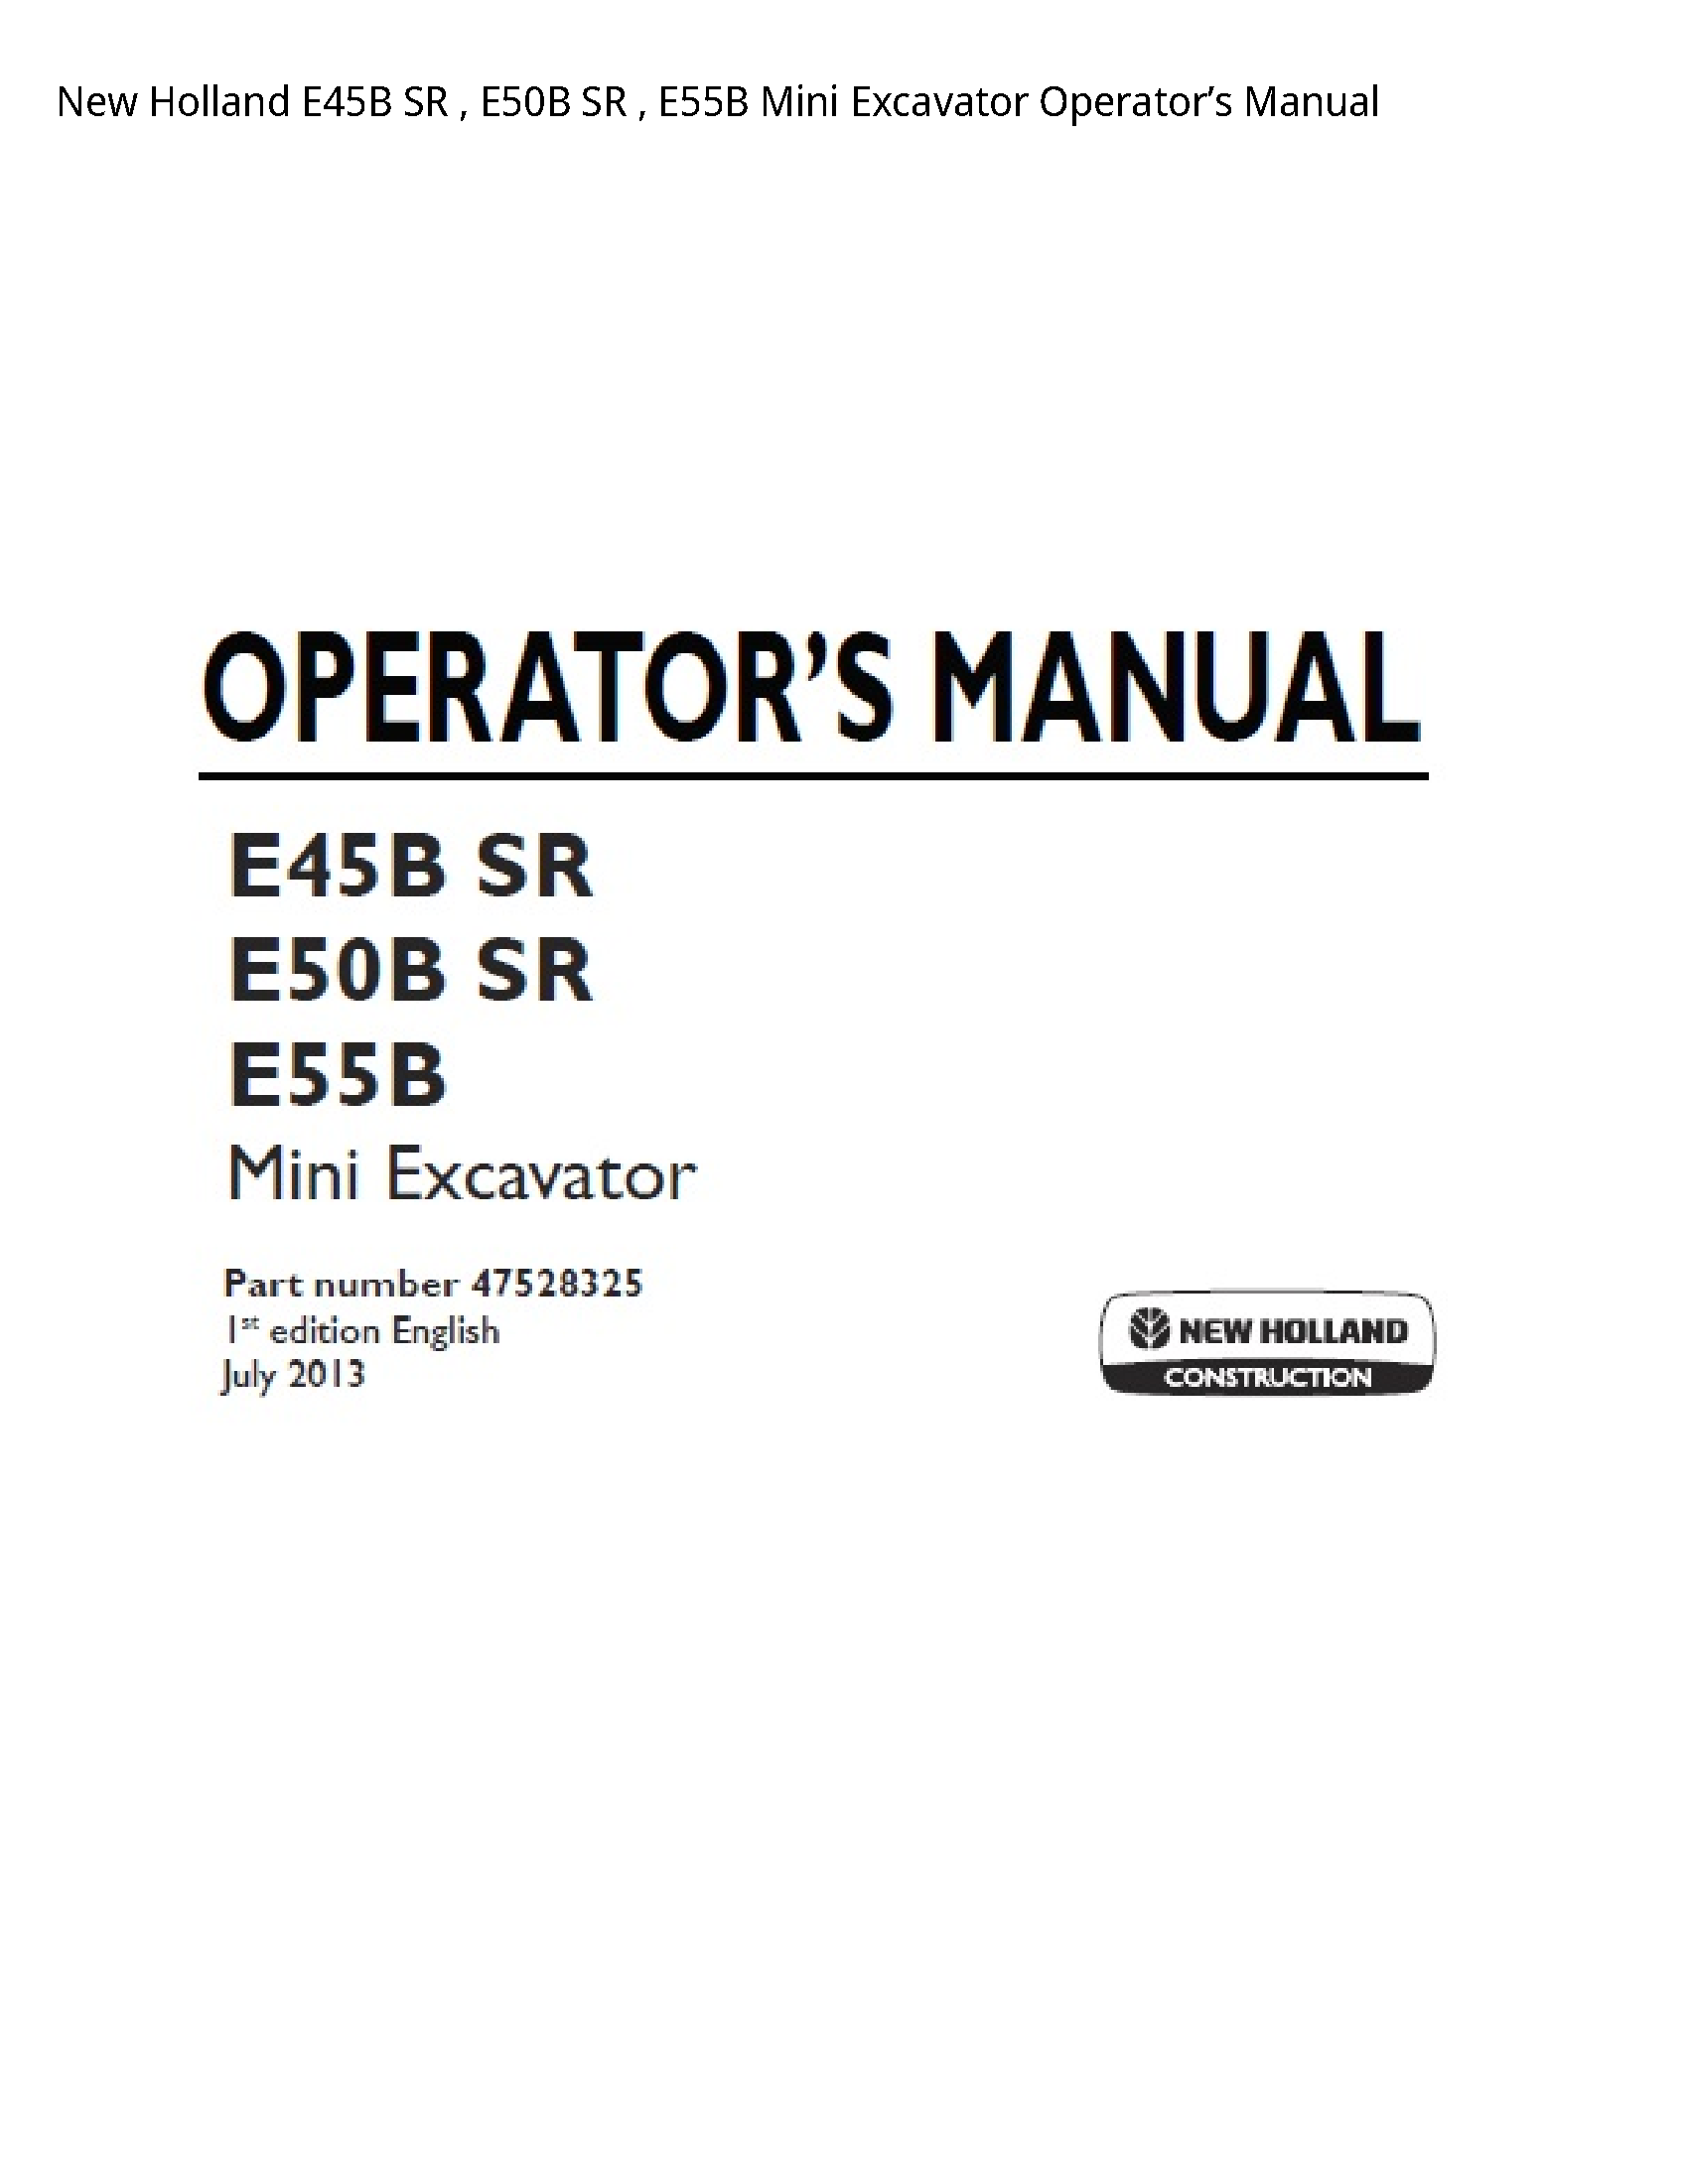 New Holland E45B SR SR Mini Excavator Operator’s manual